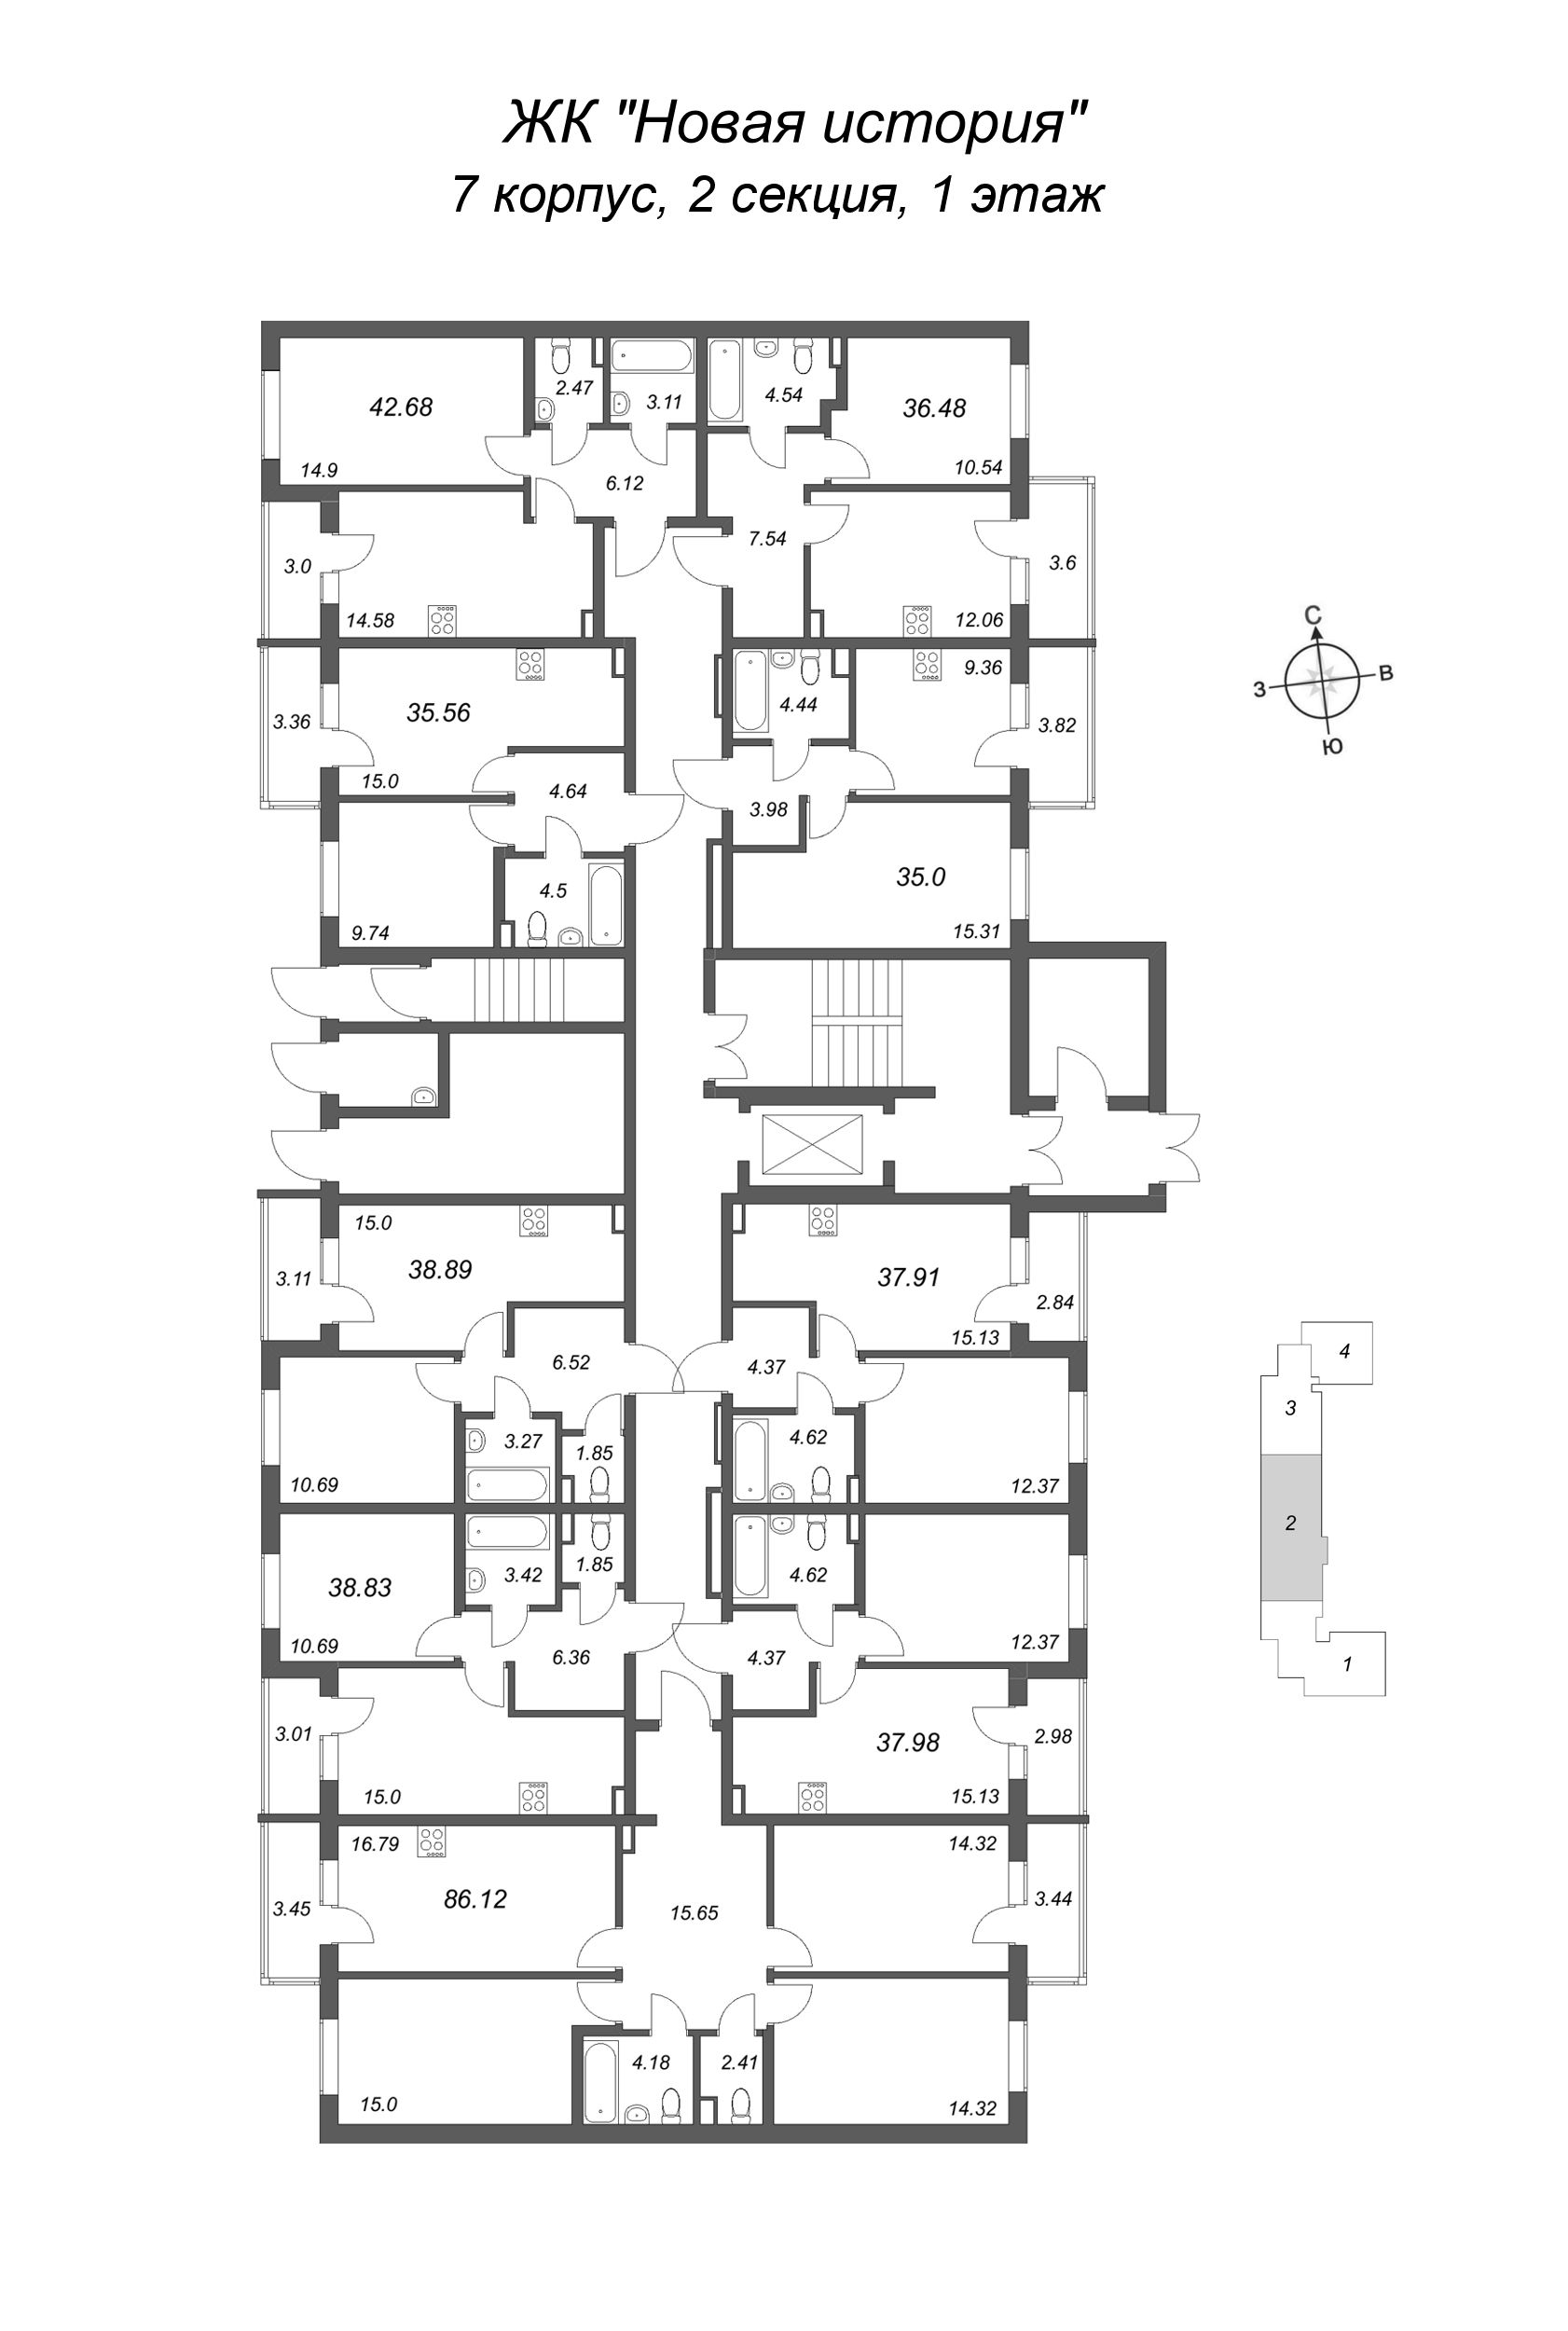 2-комнатная (Евро) квартира, 37.91 м² - планировка этажа